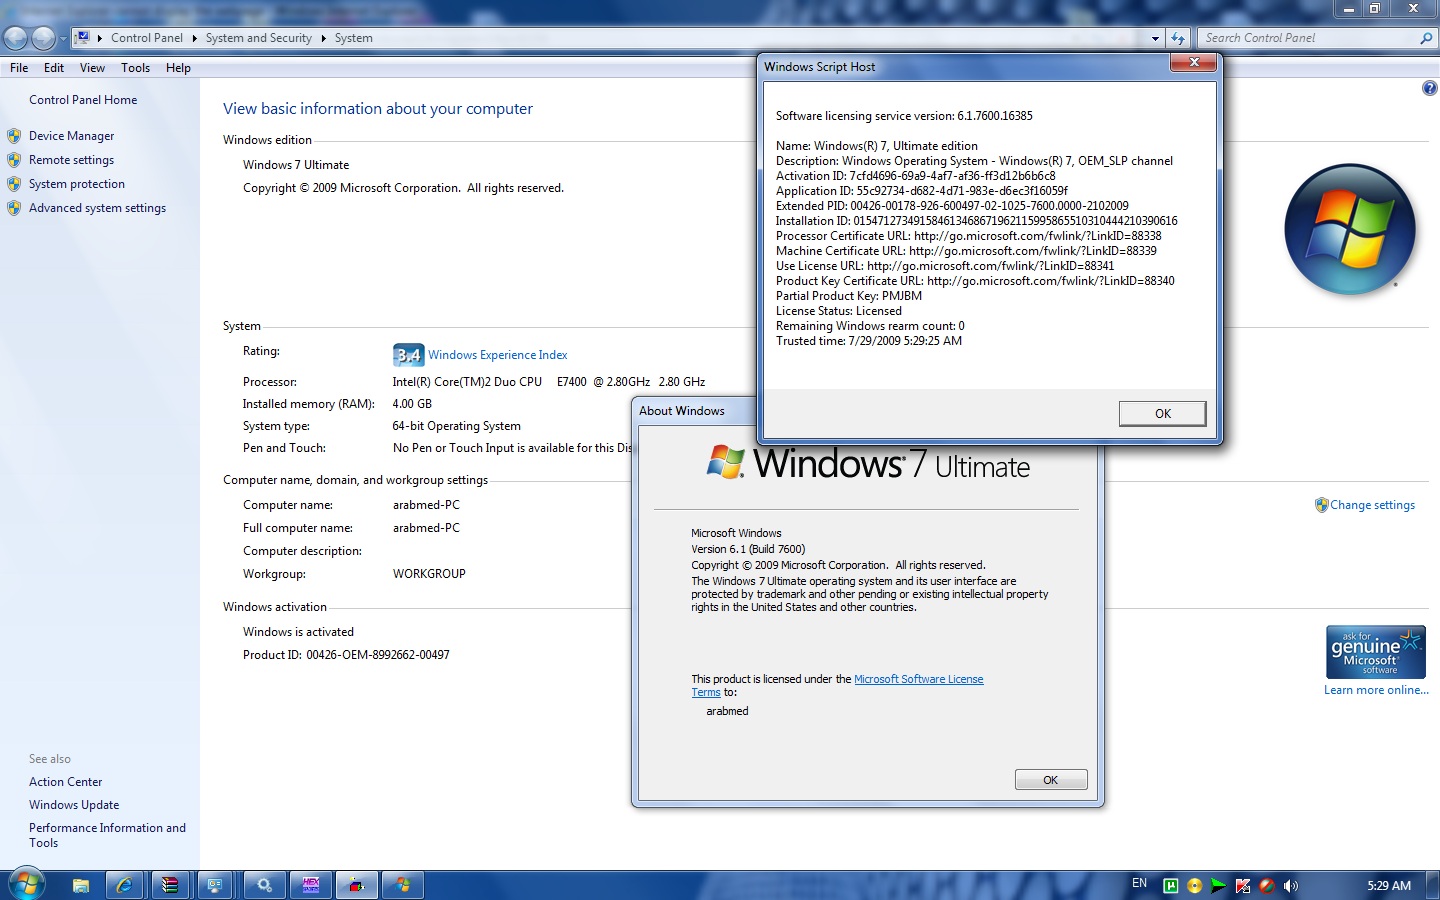 Windows 7 Ultimate Build 7601 Product Key Generator